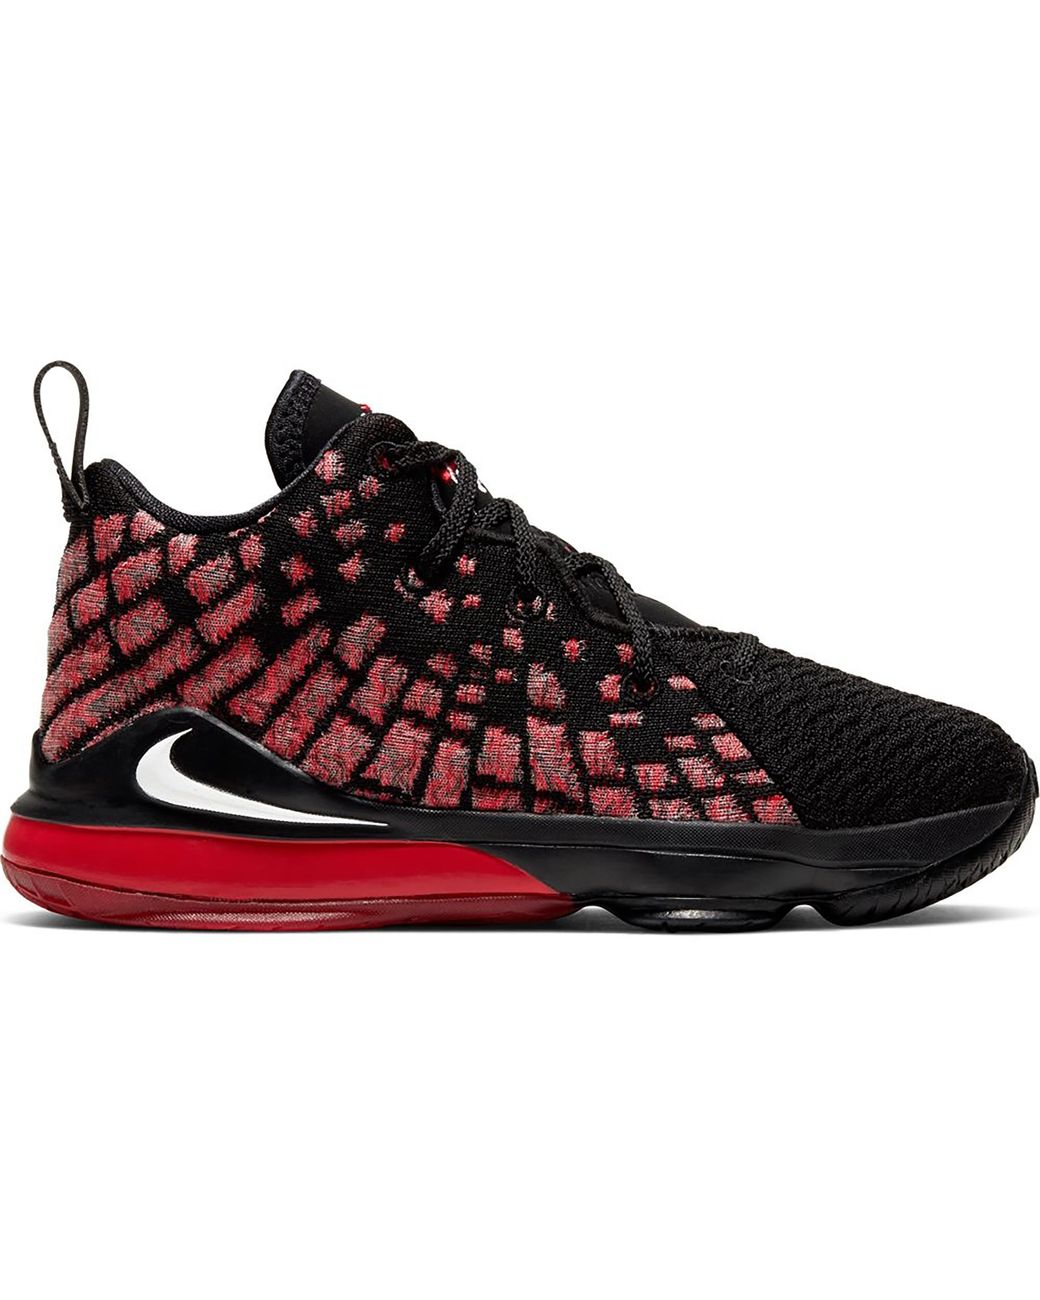 Nike Lebron 17 Infrared (ps) in Black/White-University Red (Black) - Lyst